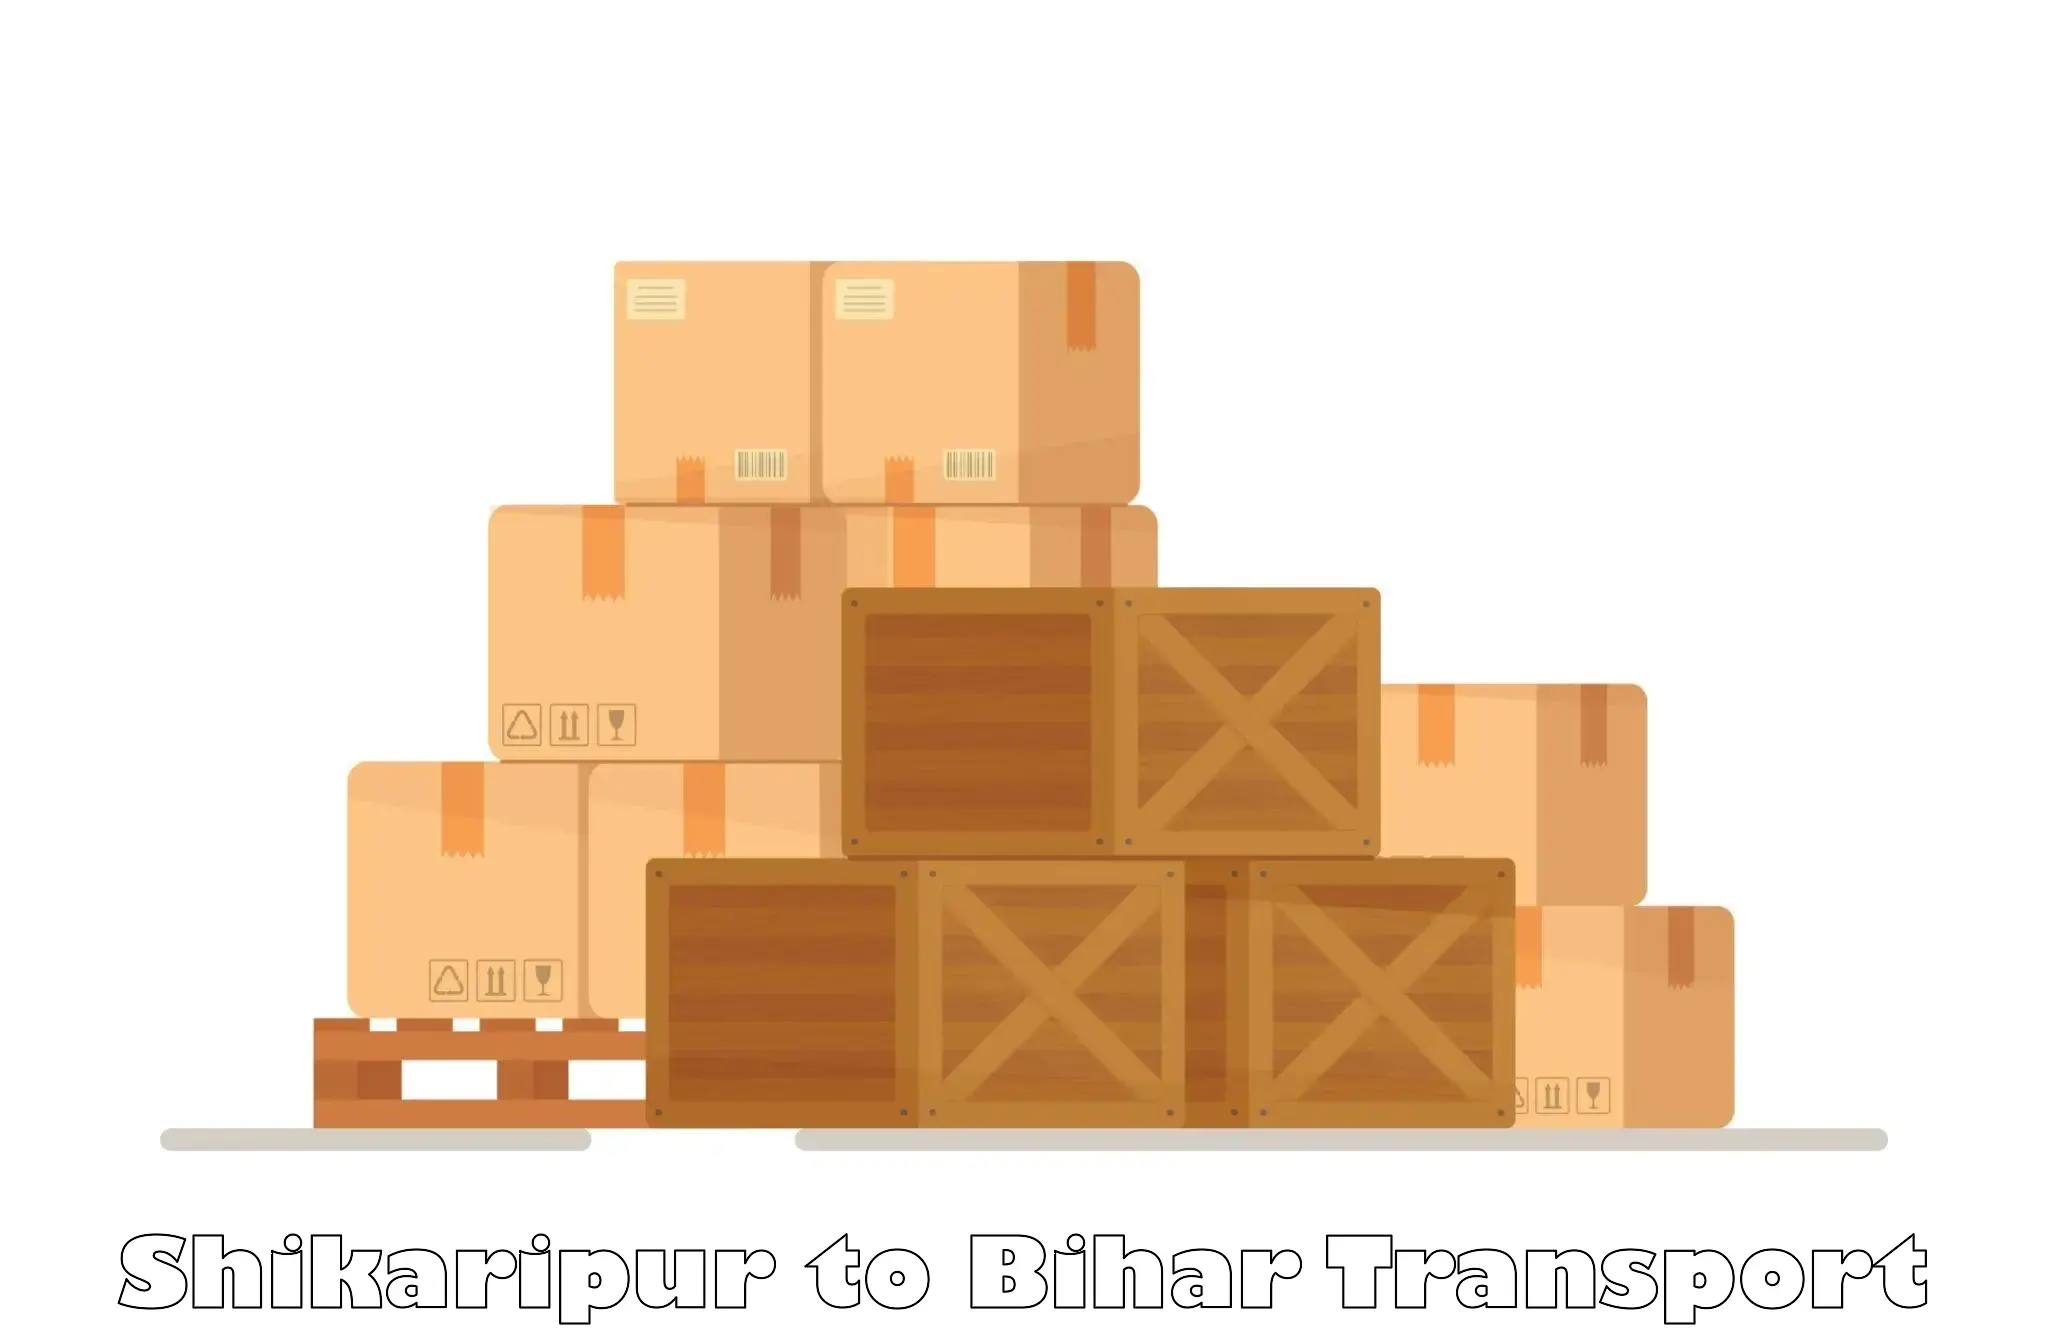 Transport in sharing Shikaripur to Bihar